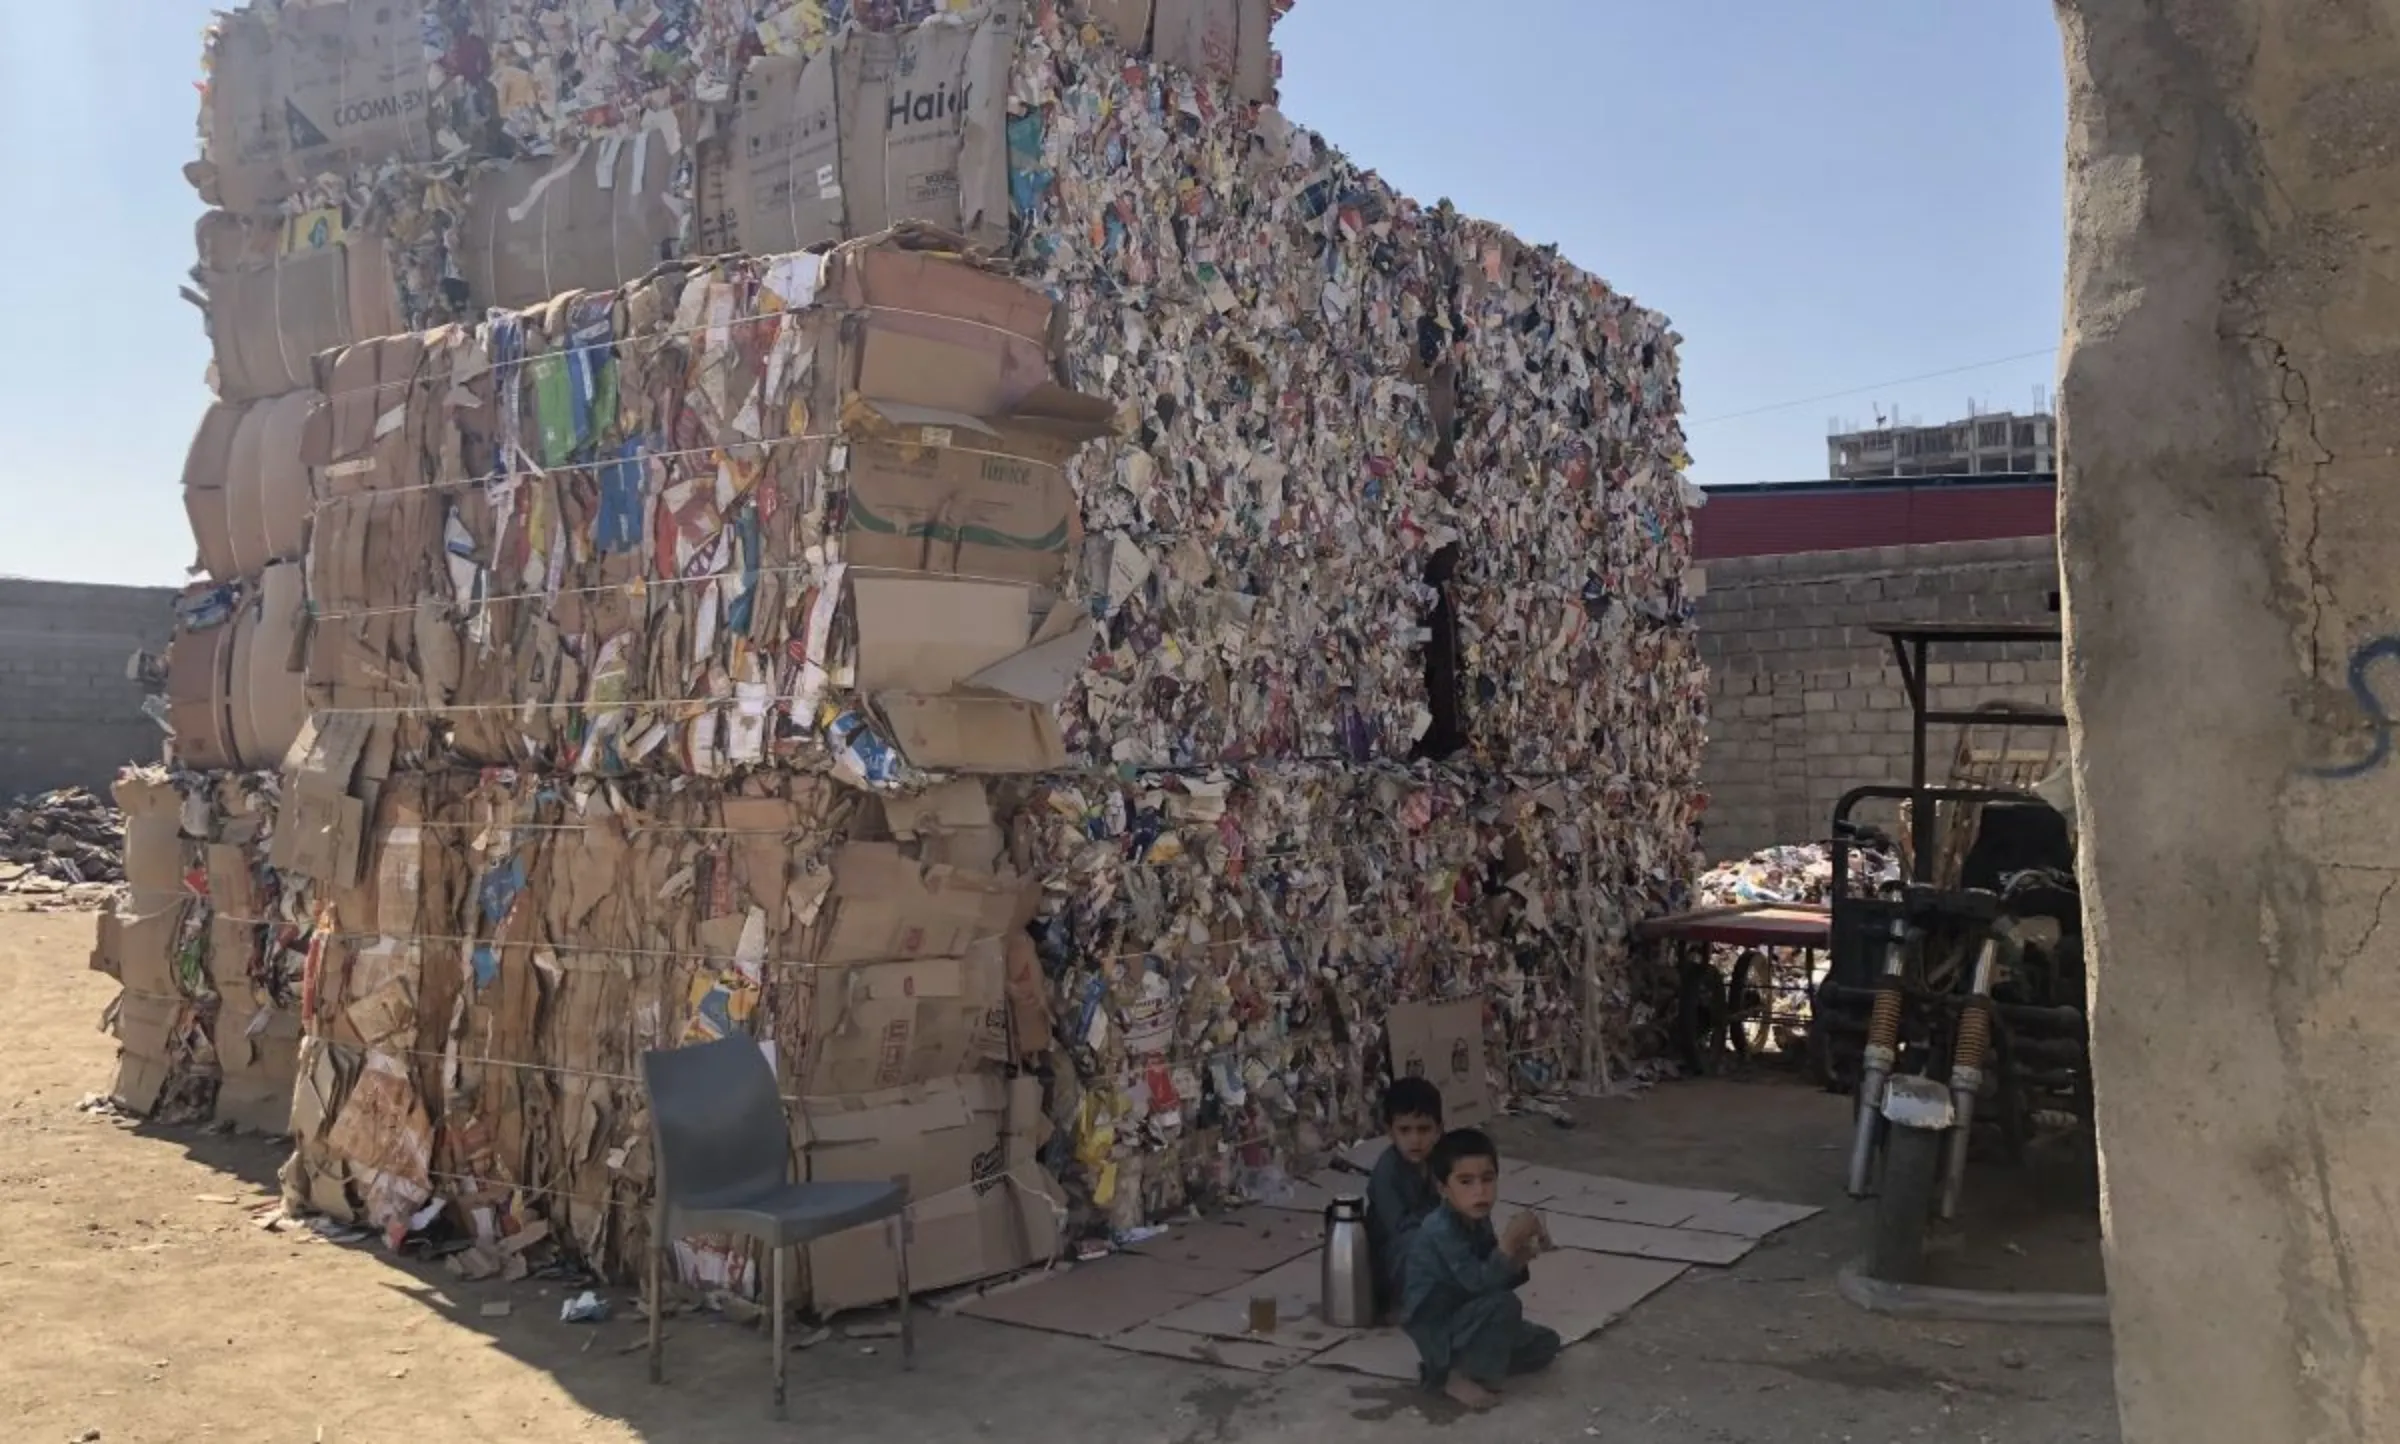 A cardboard dealer’s junkyard behind Al-Asif Square, in the Malir district of Karachi, Pakistan, November 11, 2023